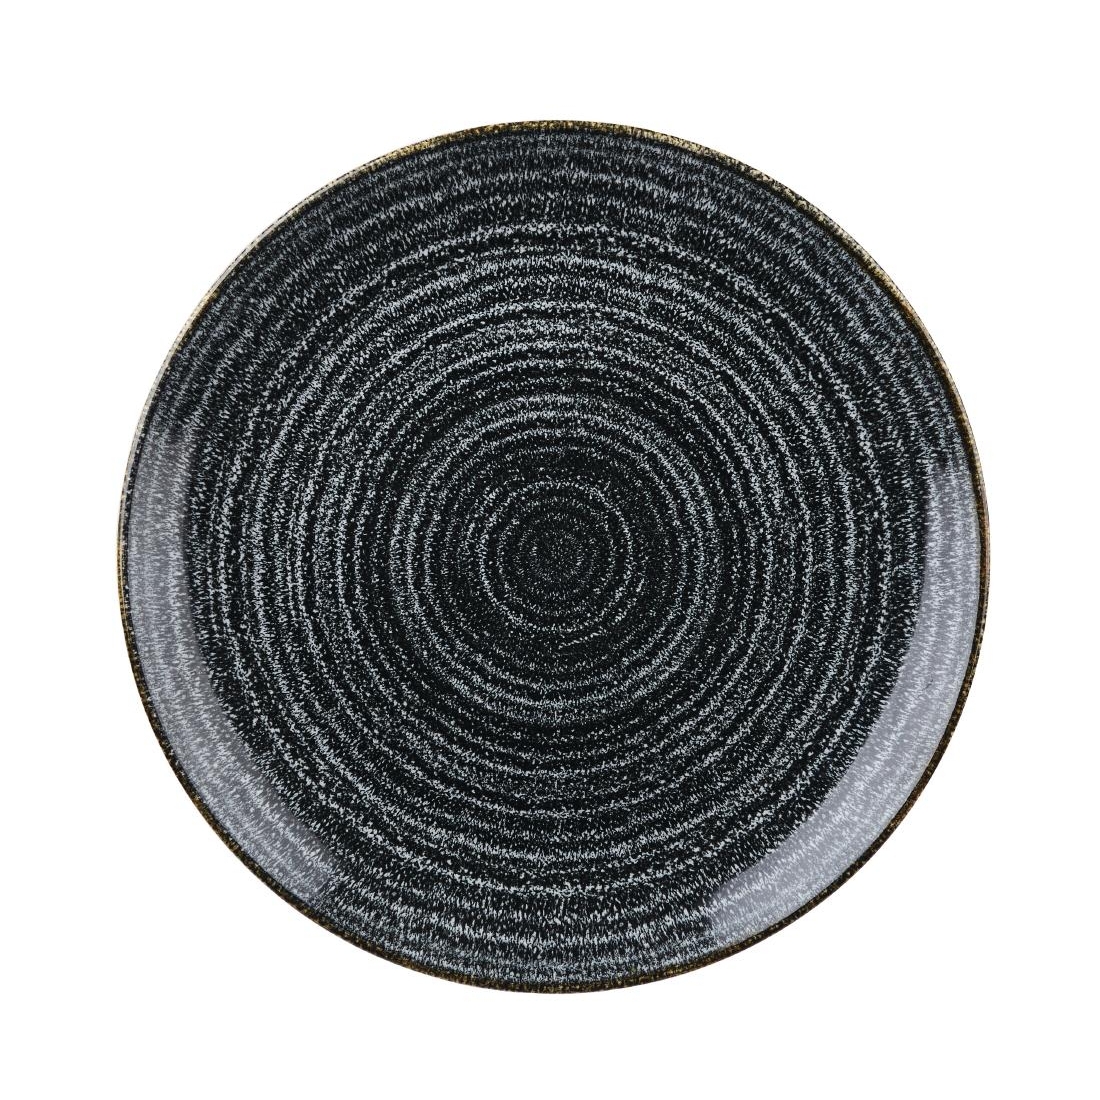 Churchill Studio Prints Homespun Charcoal Black Coupe Plate 165mm